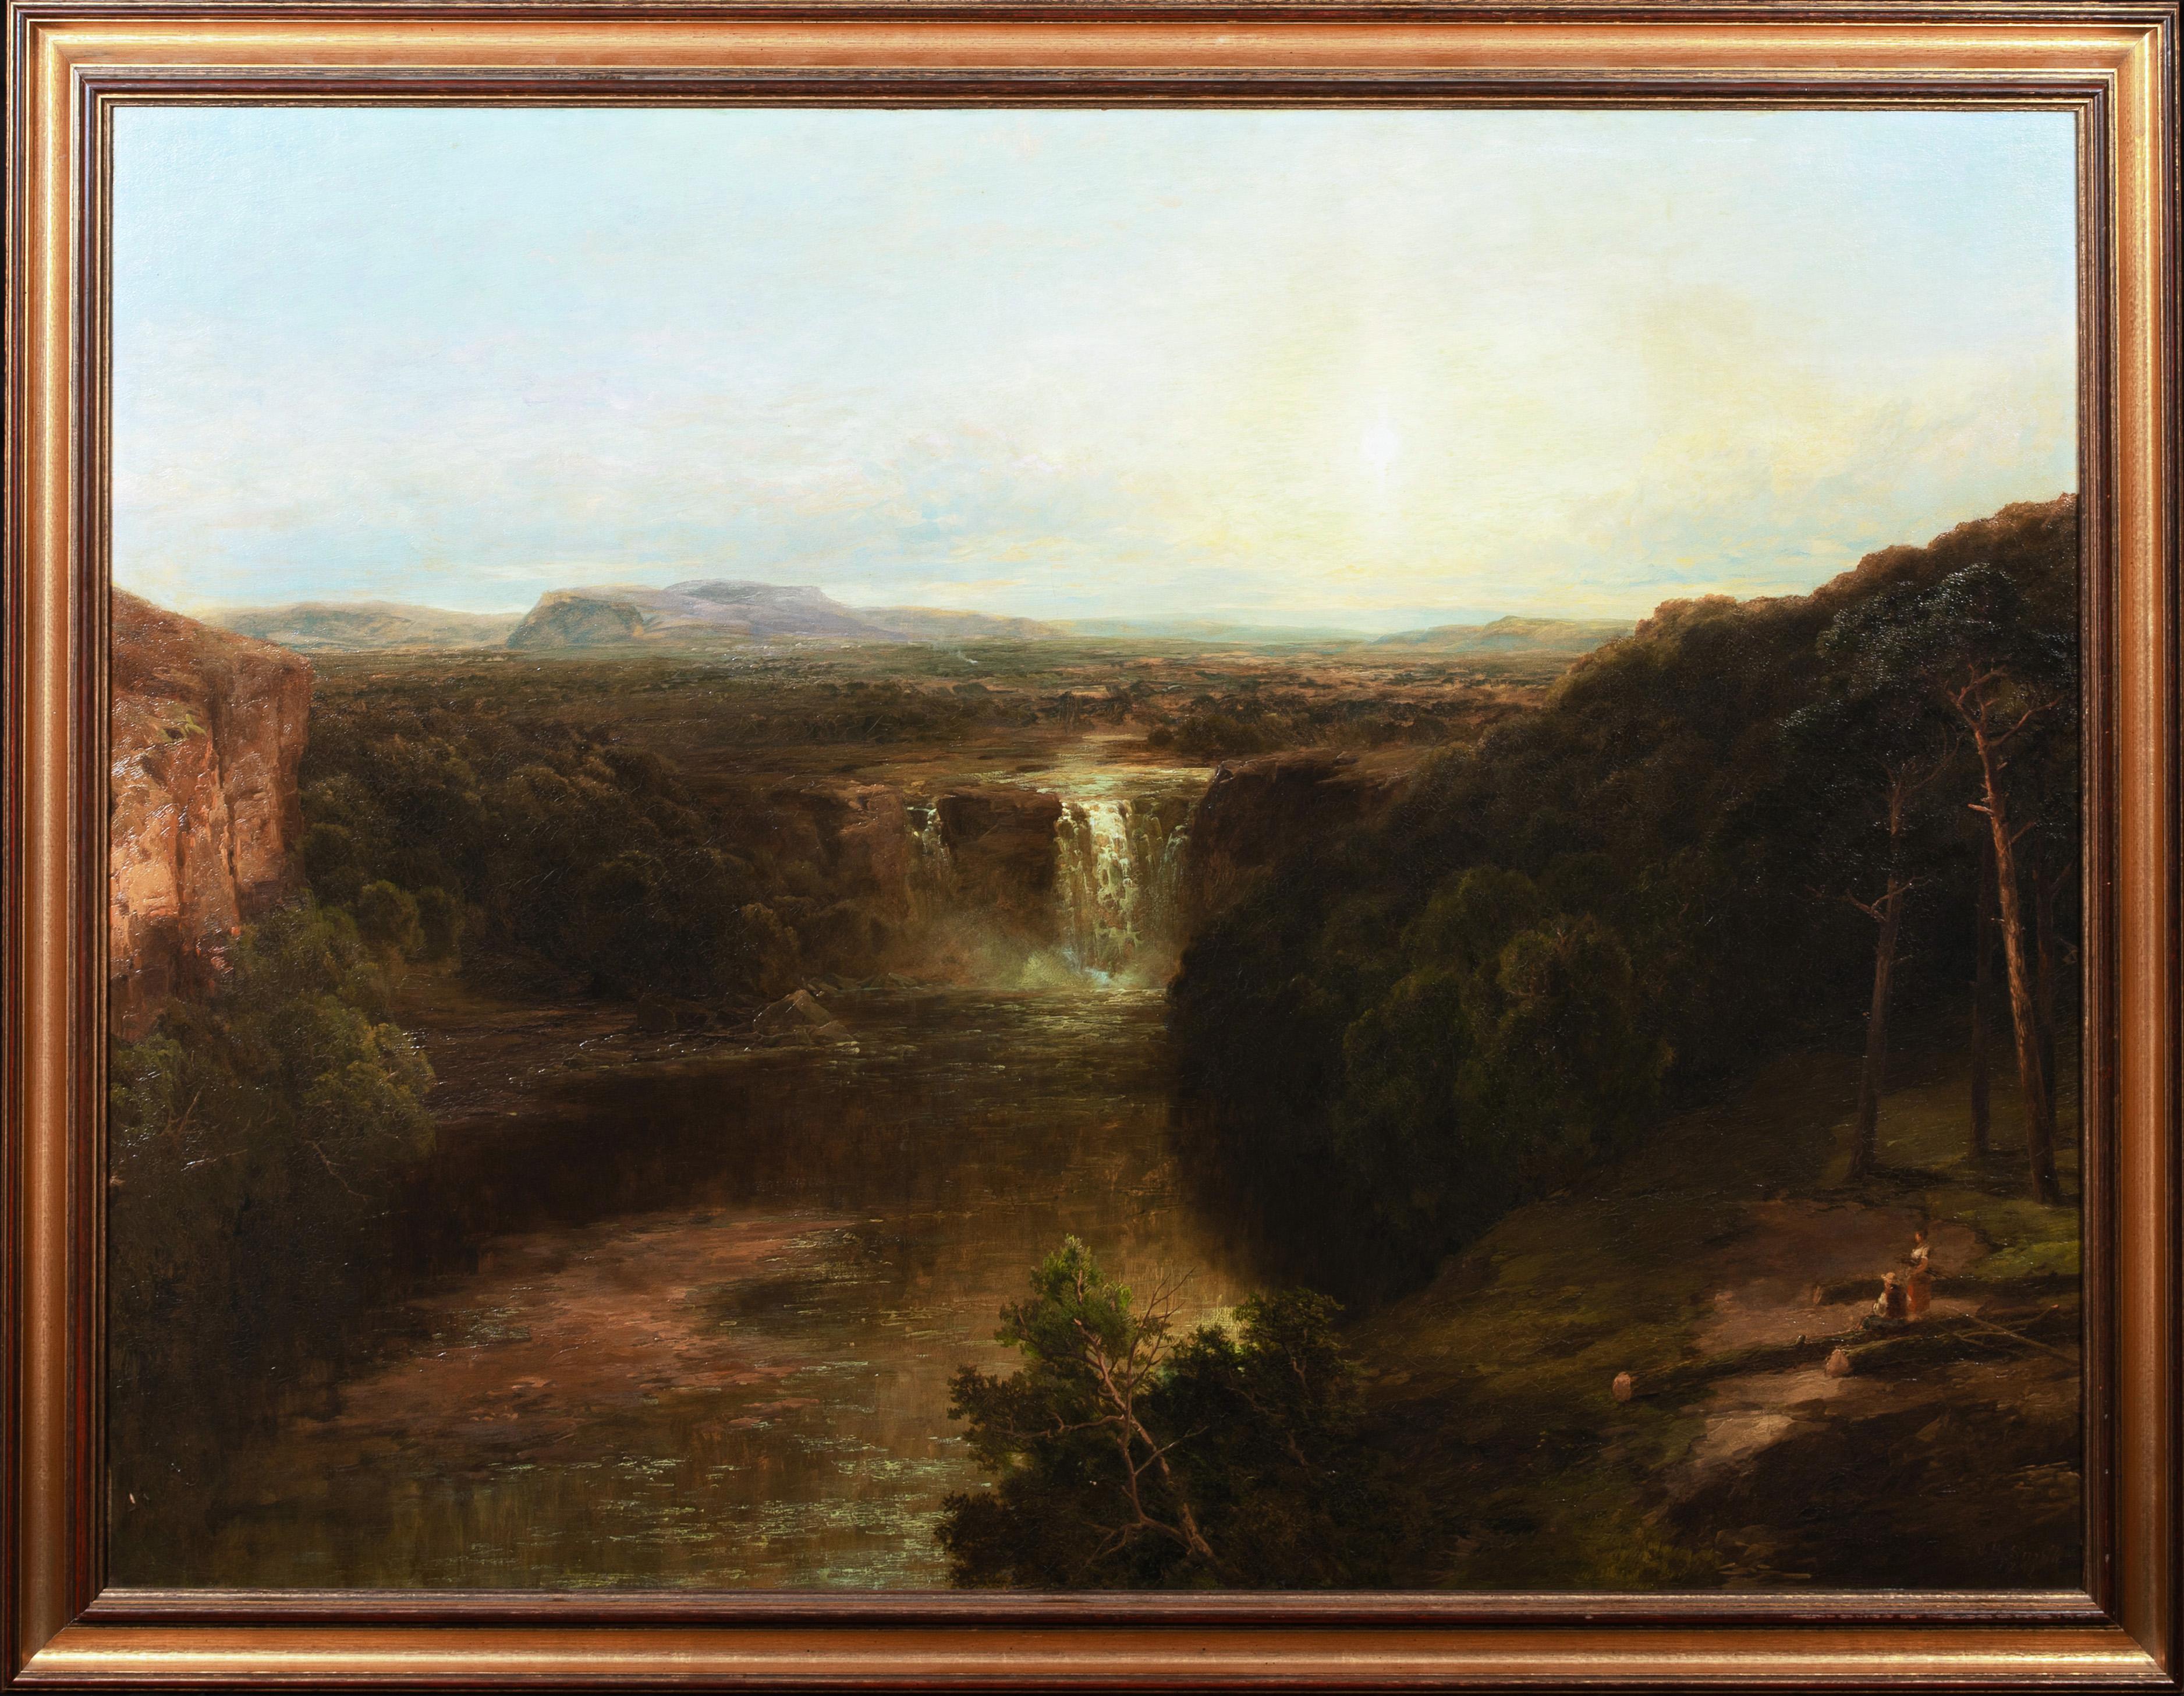 Waterfall Vale of Neath Glamorganshire, 19th Century  